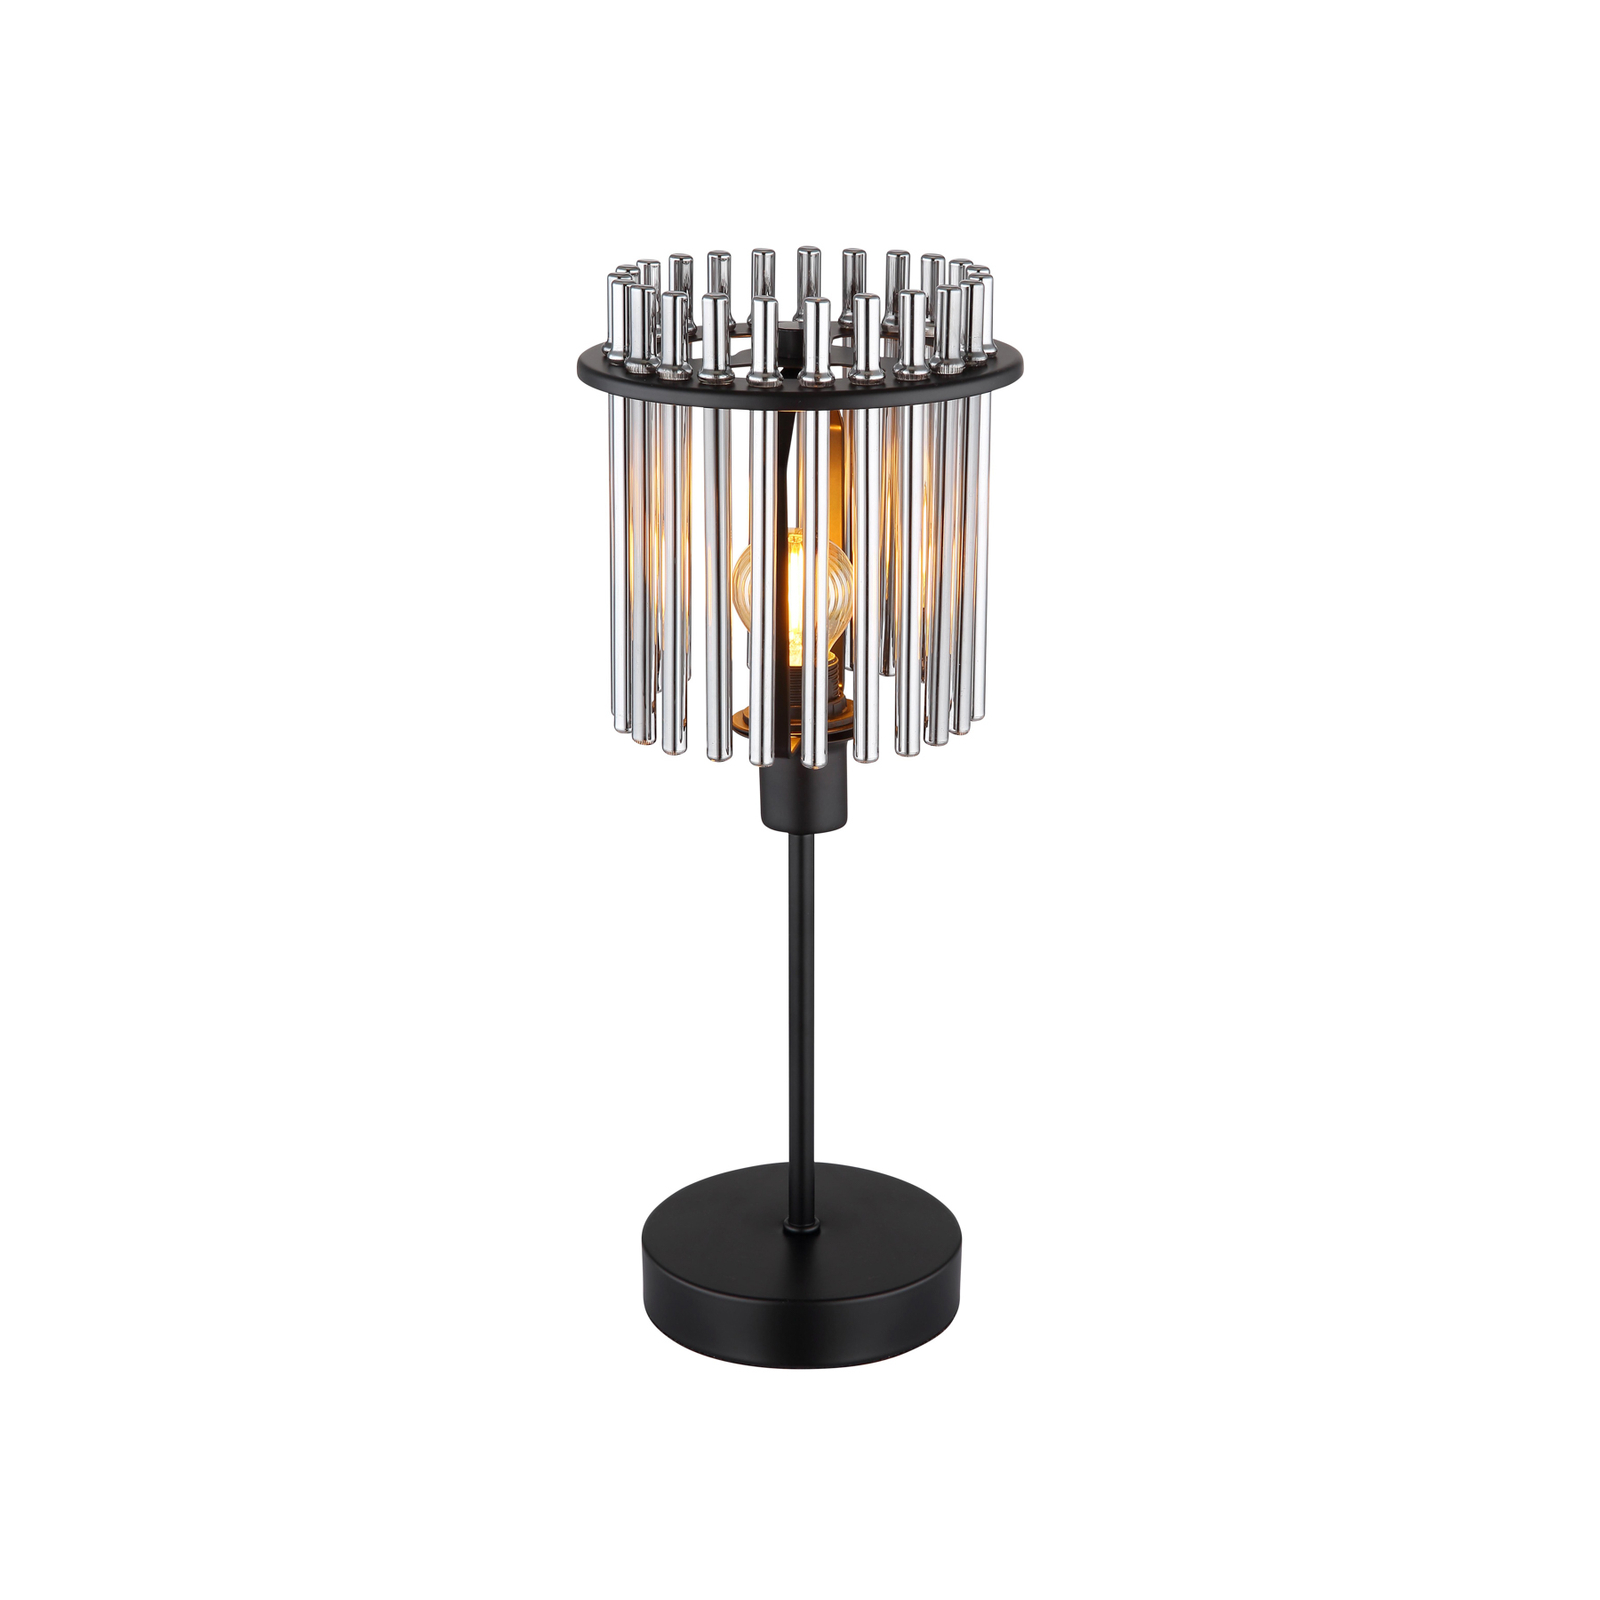 Gorley table lamp, height 37.5 cm, smoky grey, glass/metal